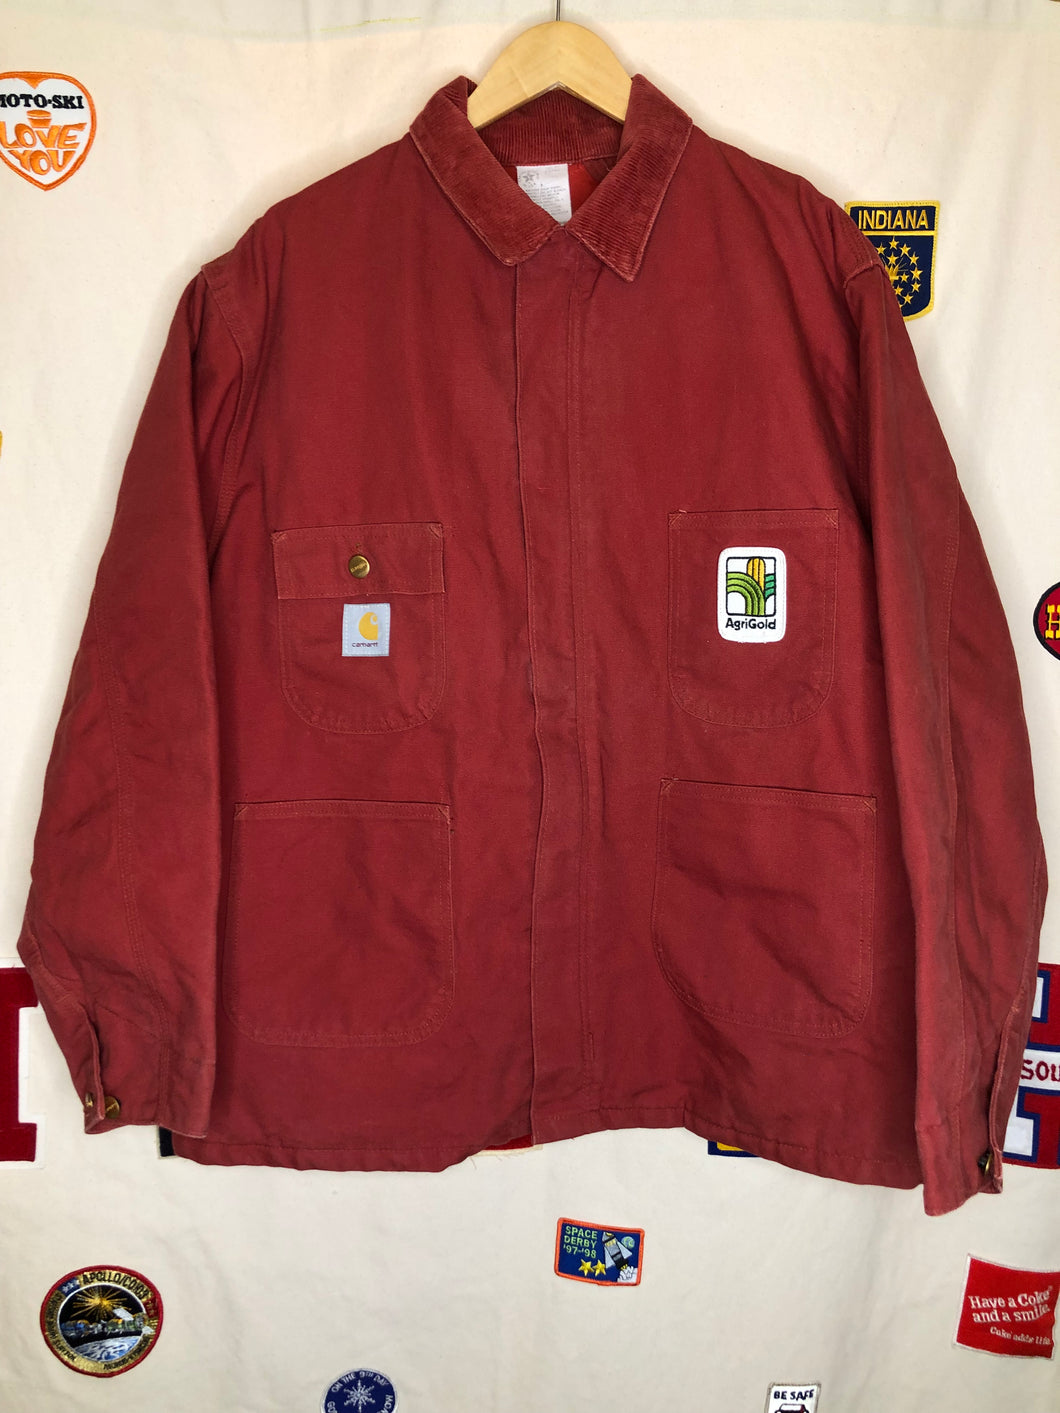 Vintage Carhartt Agrigold Red Canvas Chore Jacket: XL